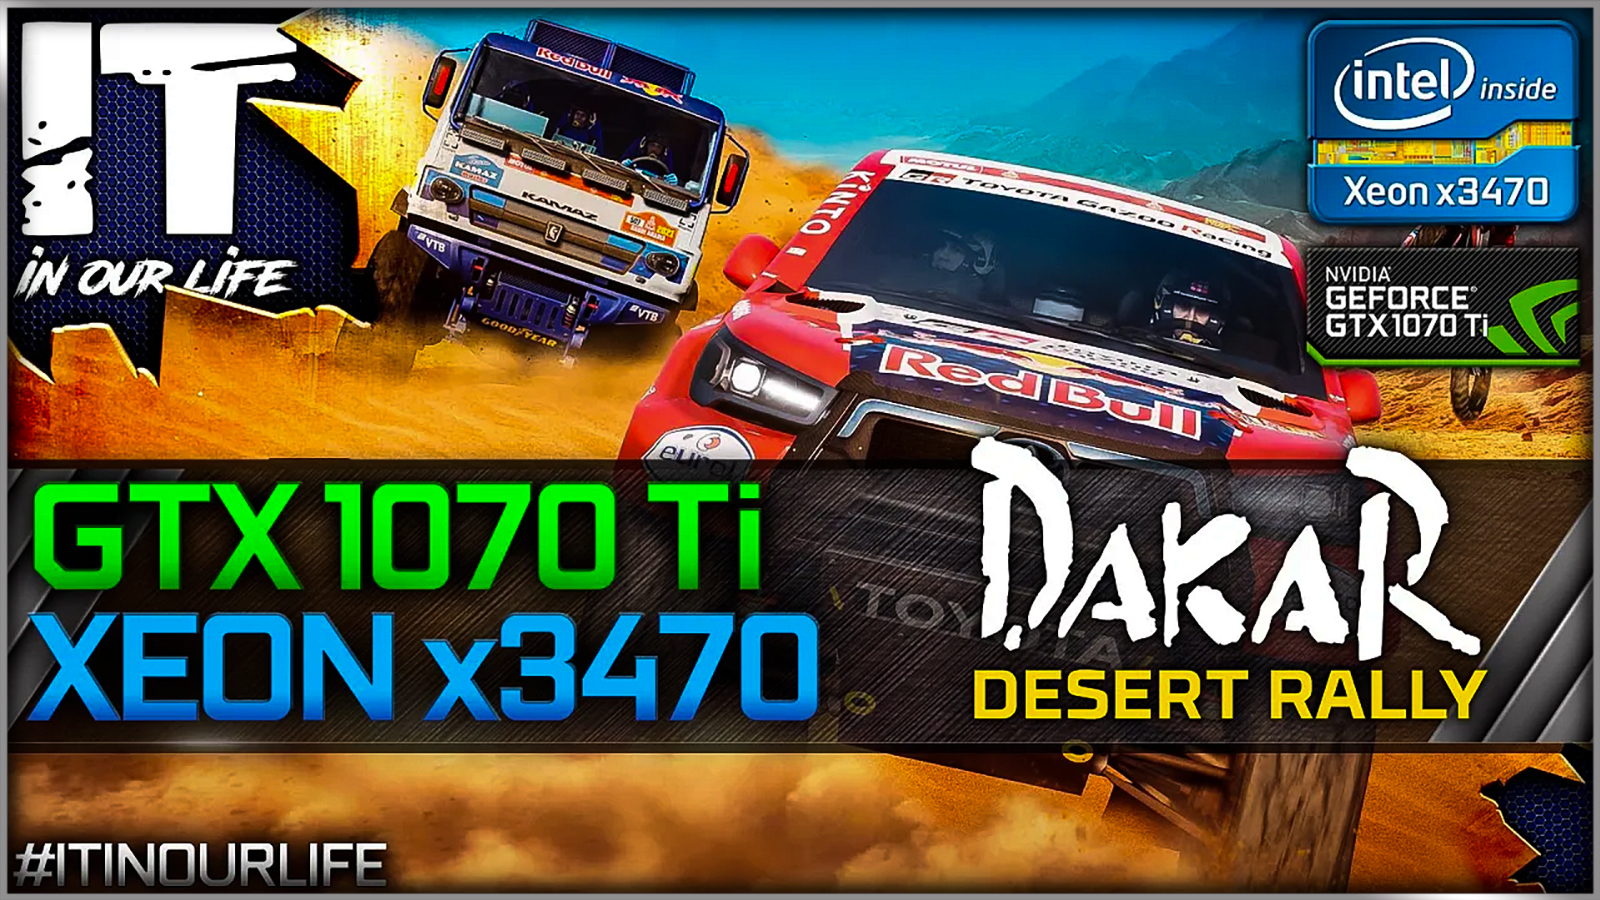 Dakar Desert Rally - Xeon x3470 + GTX 1070 Ti | Gameplay | Frame Rate Test | 1080p